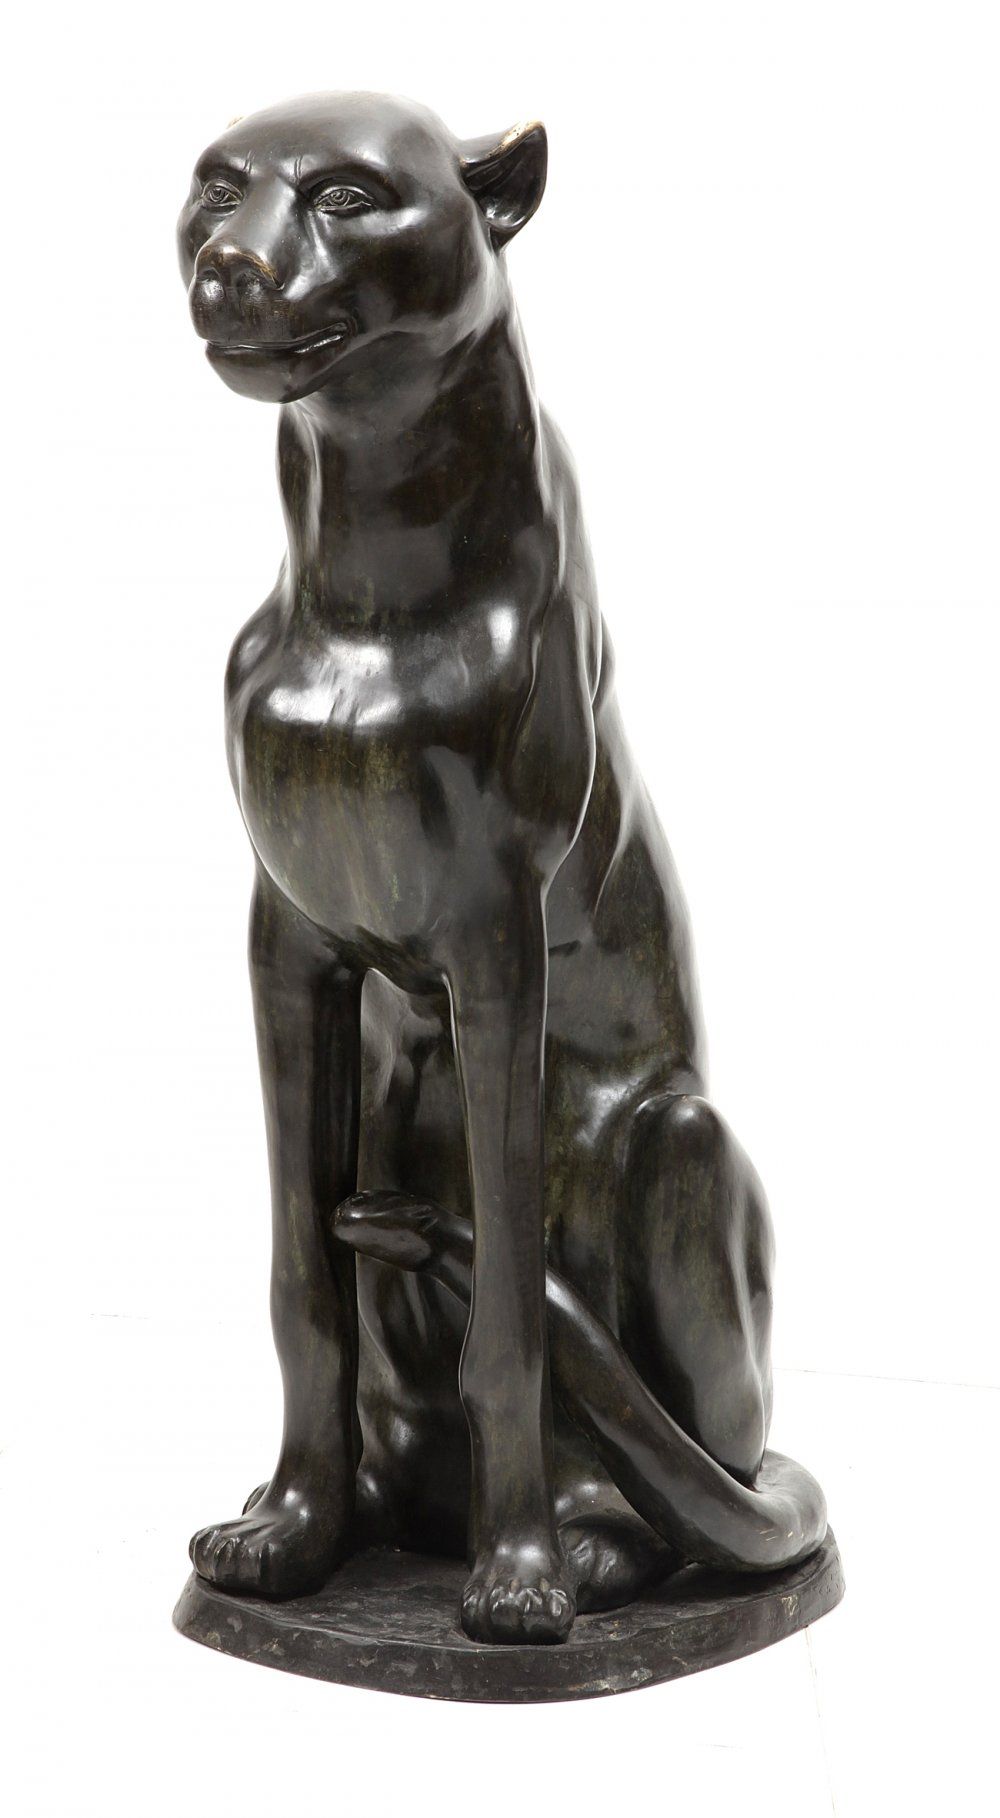 Null 装饰艺术雕塑。法国，20世纪20年代至30年代。
"黑豹"。
青铜材质。
作品的某些地方（头部，耳朵......）有铜锈磨损。
出处。阿兰-德隆收藏。&hellip;